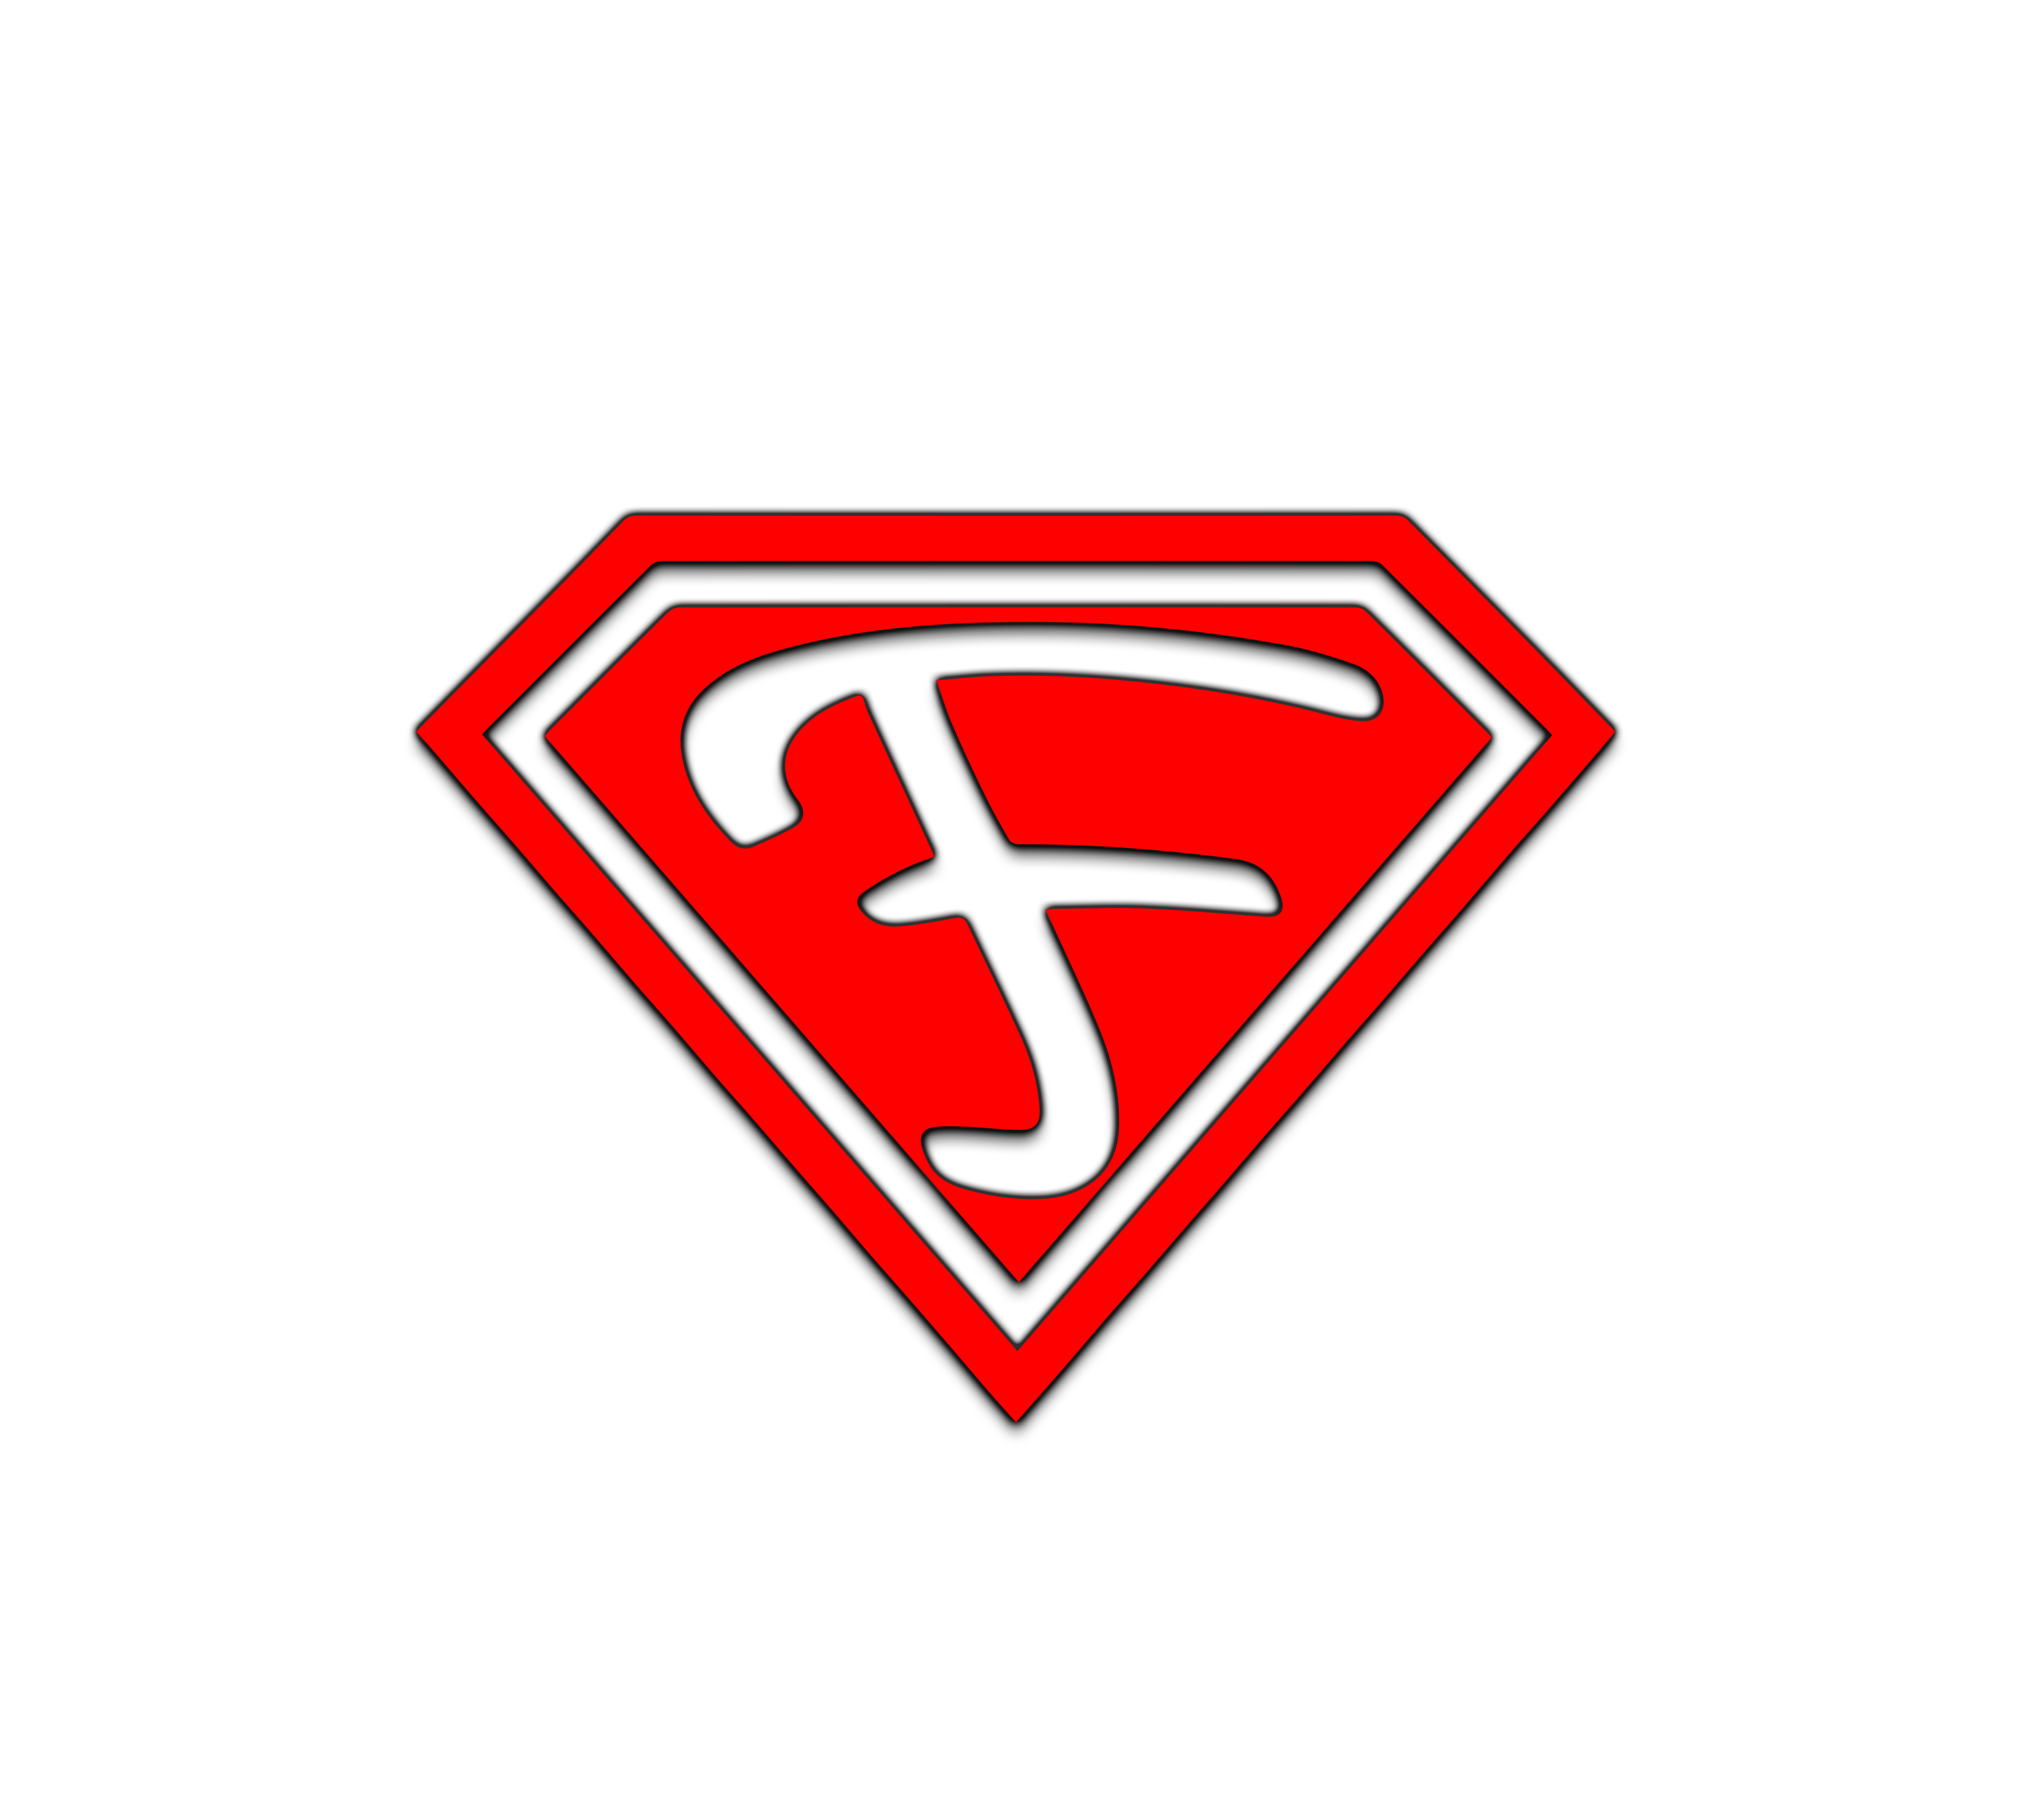 Red F in Shield Logo - Funderbuddies shield logo